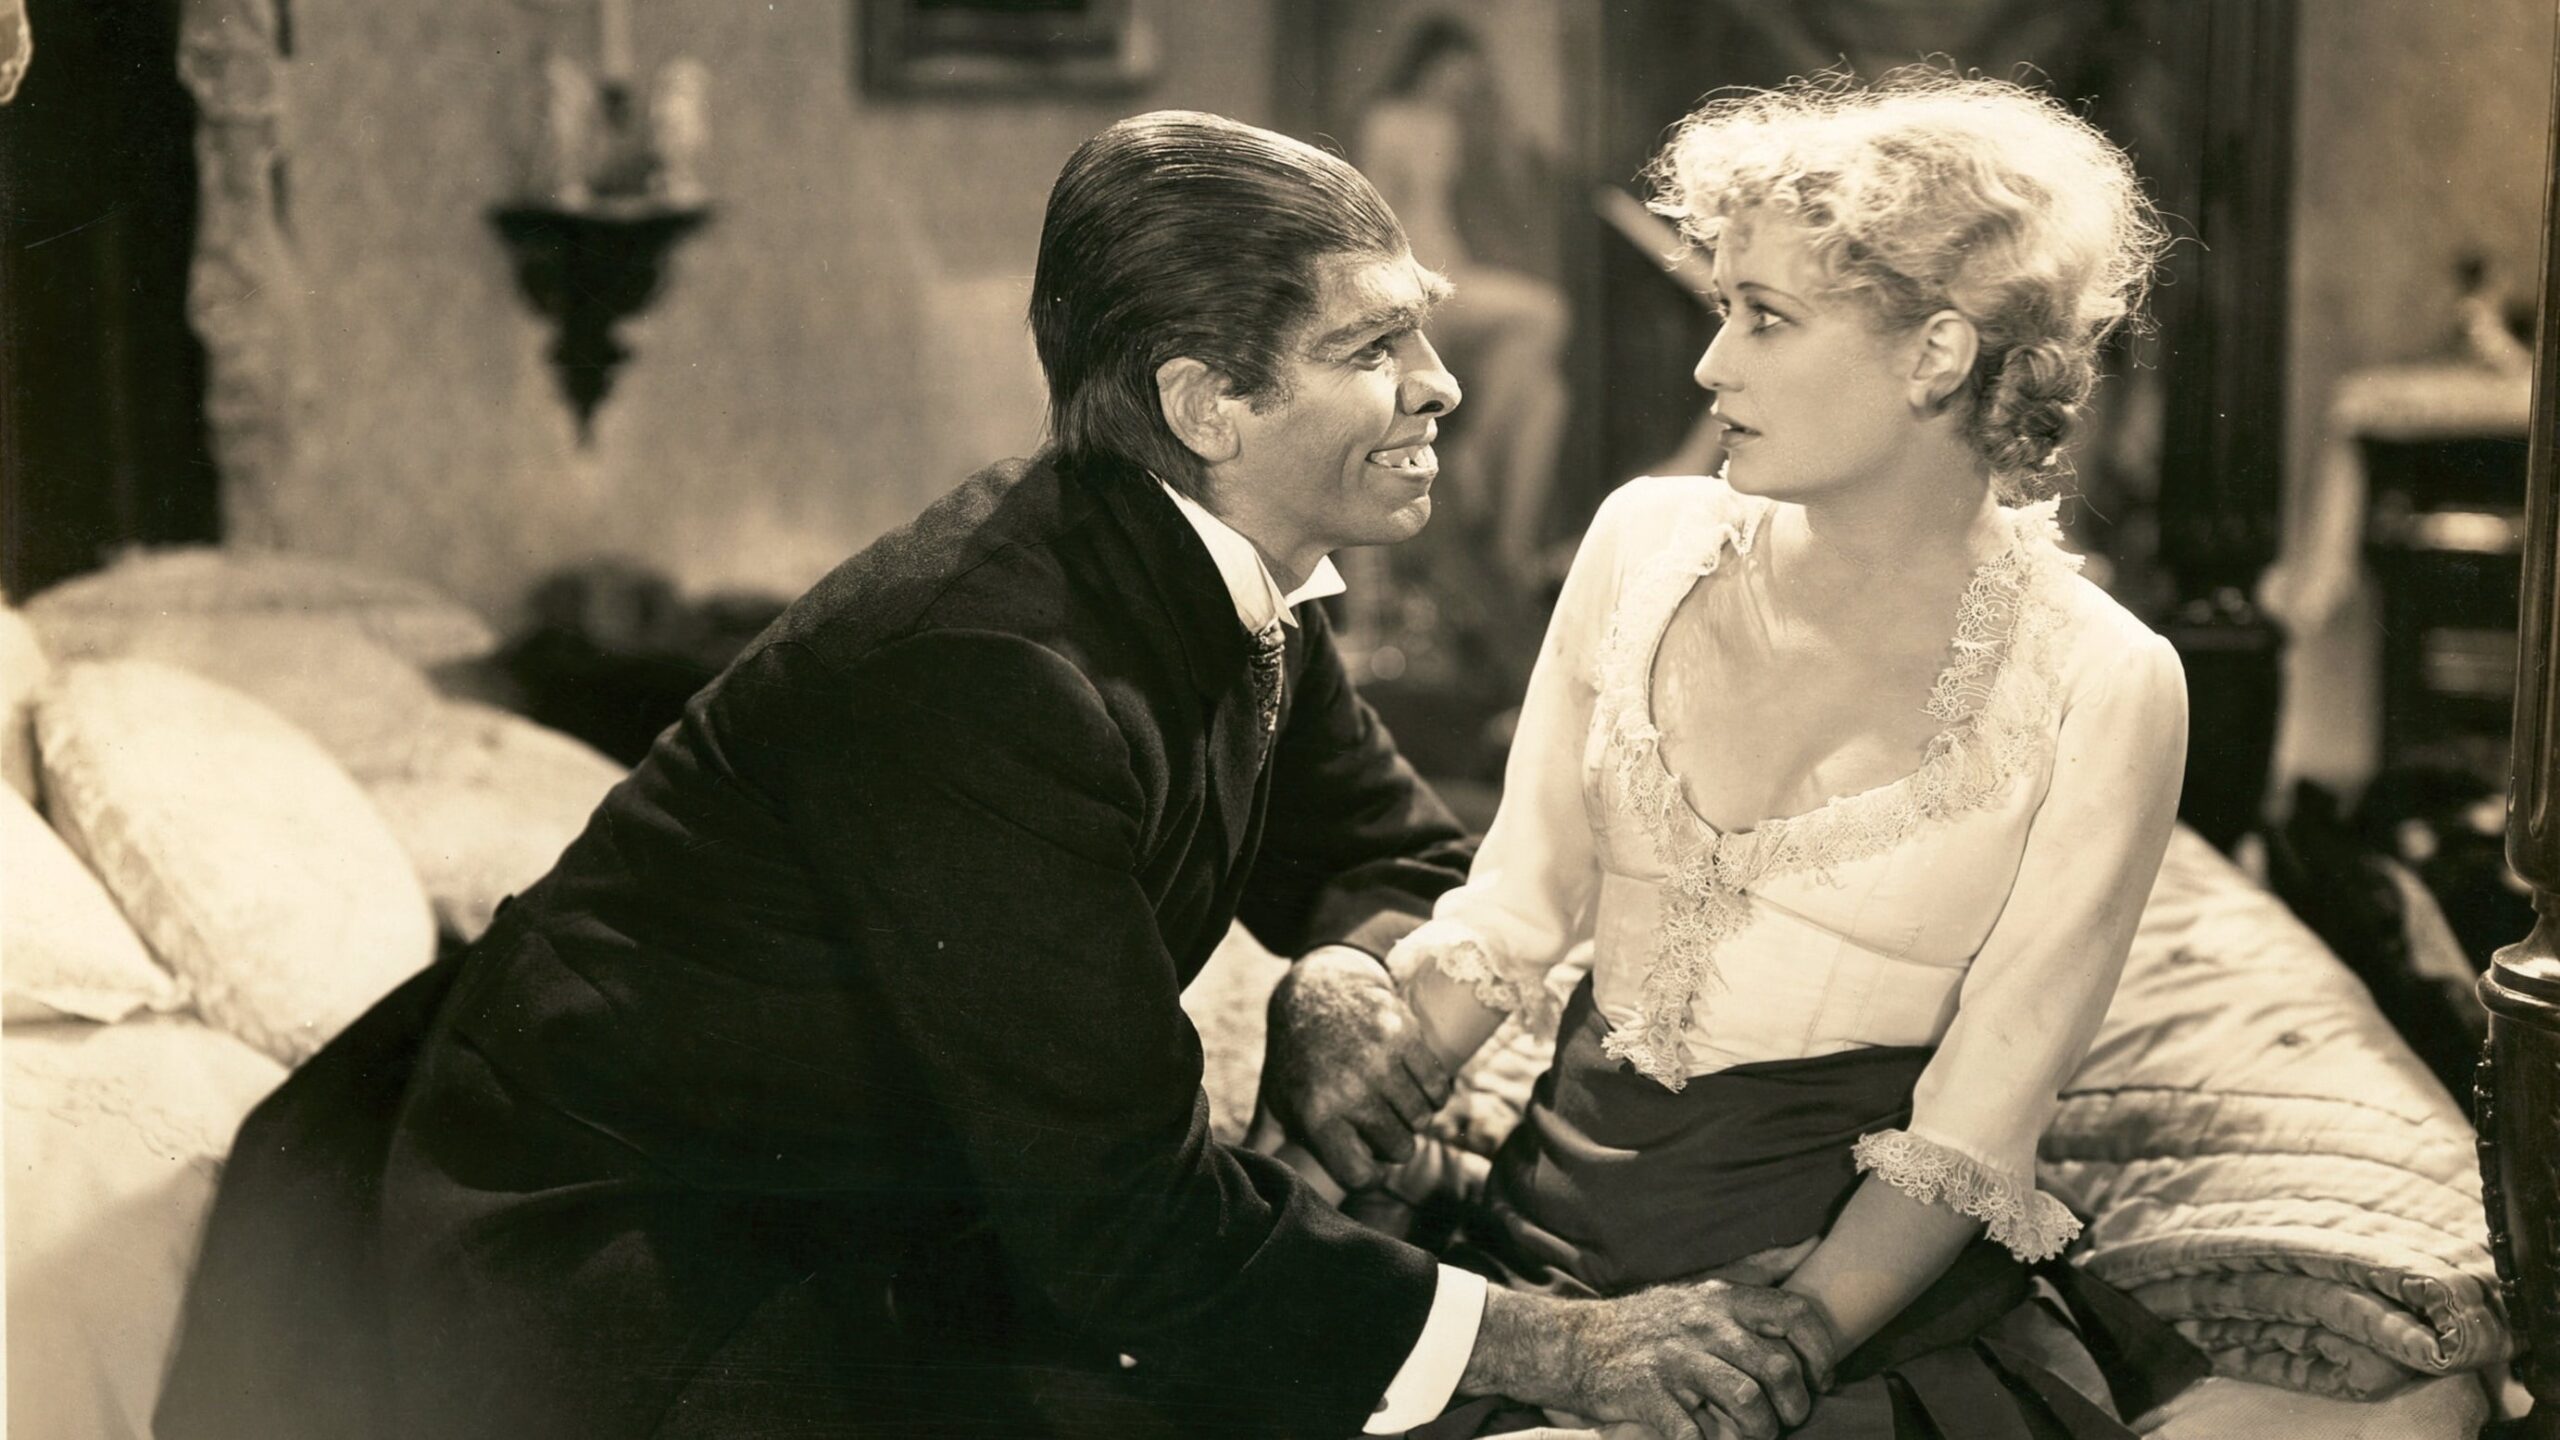 دانلود فیلم Dr. Jekyll and Mr. Hyde 1931